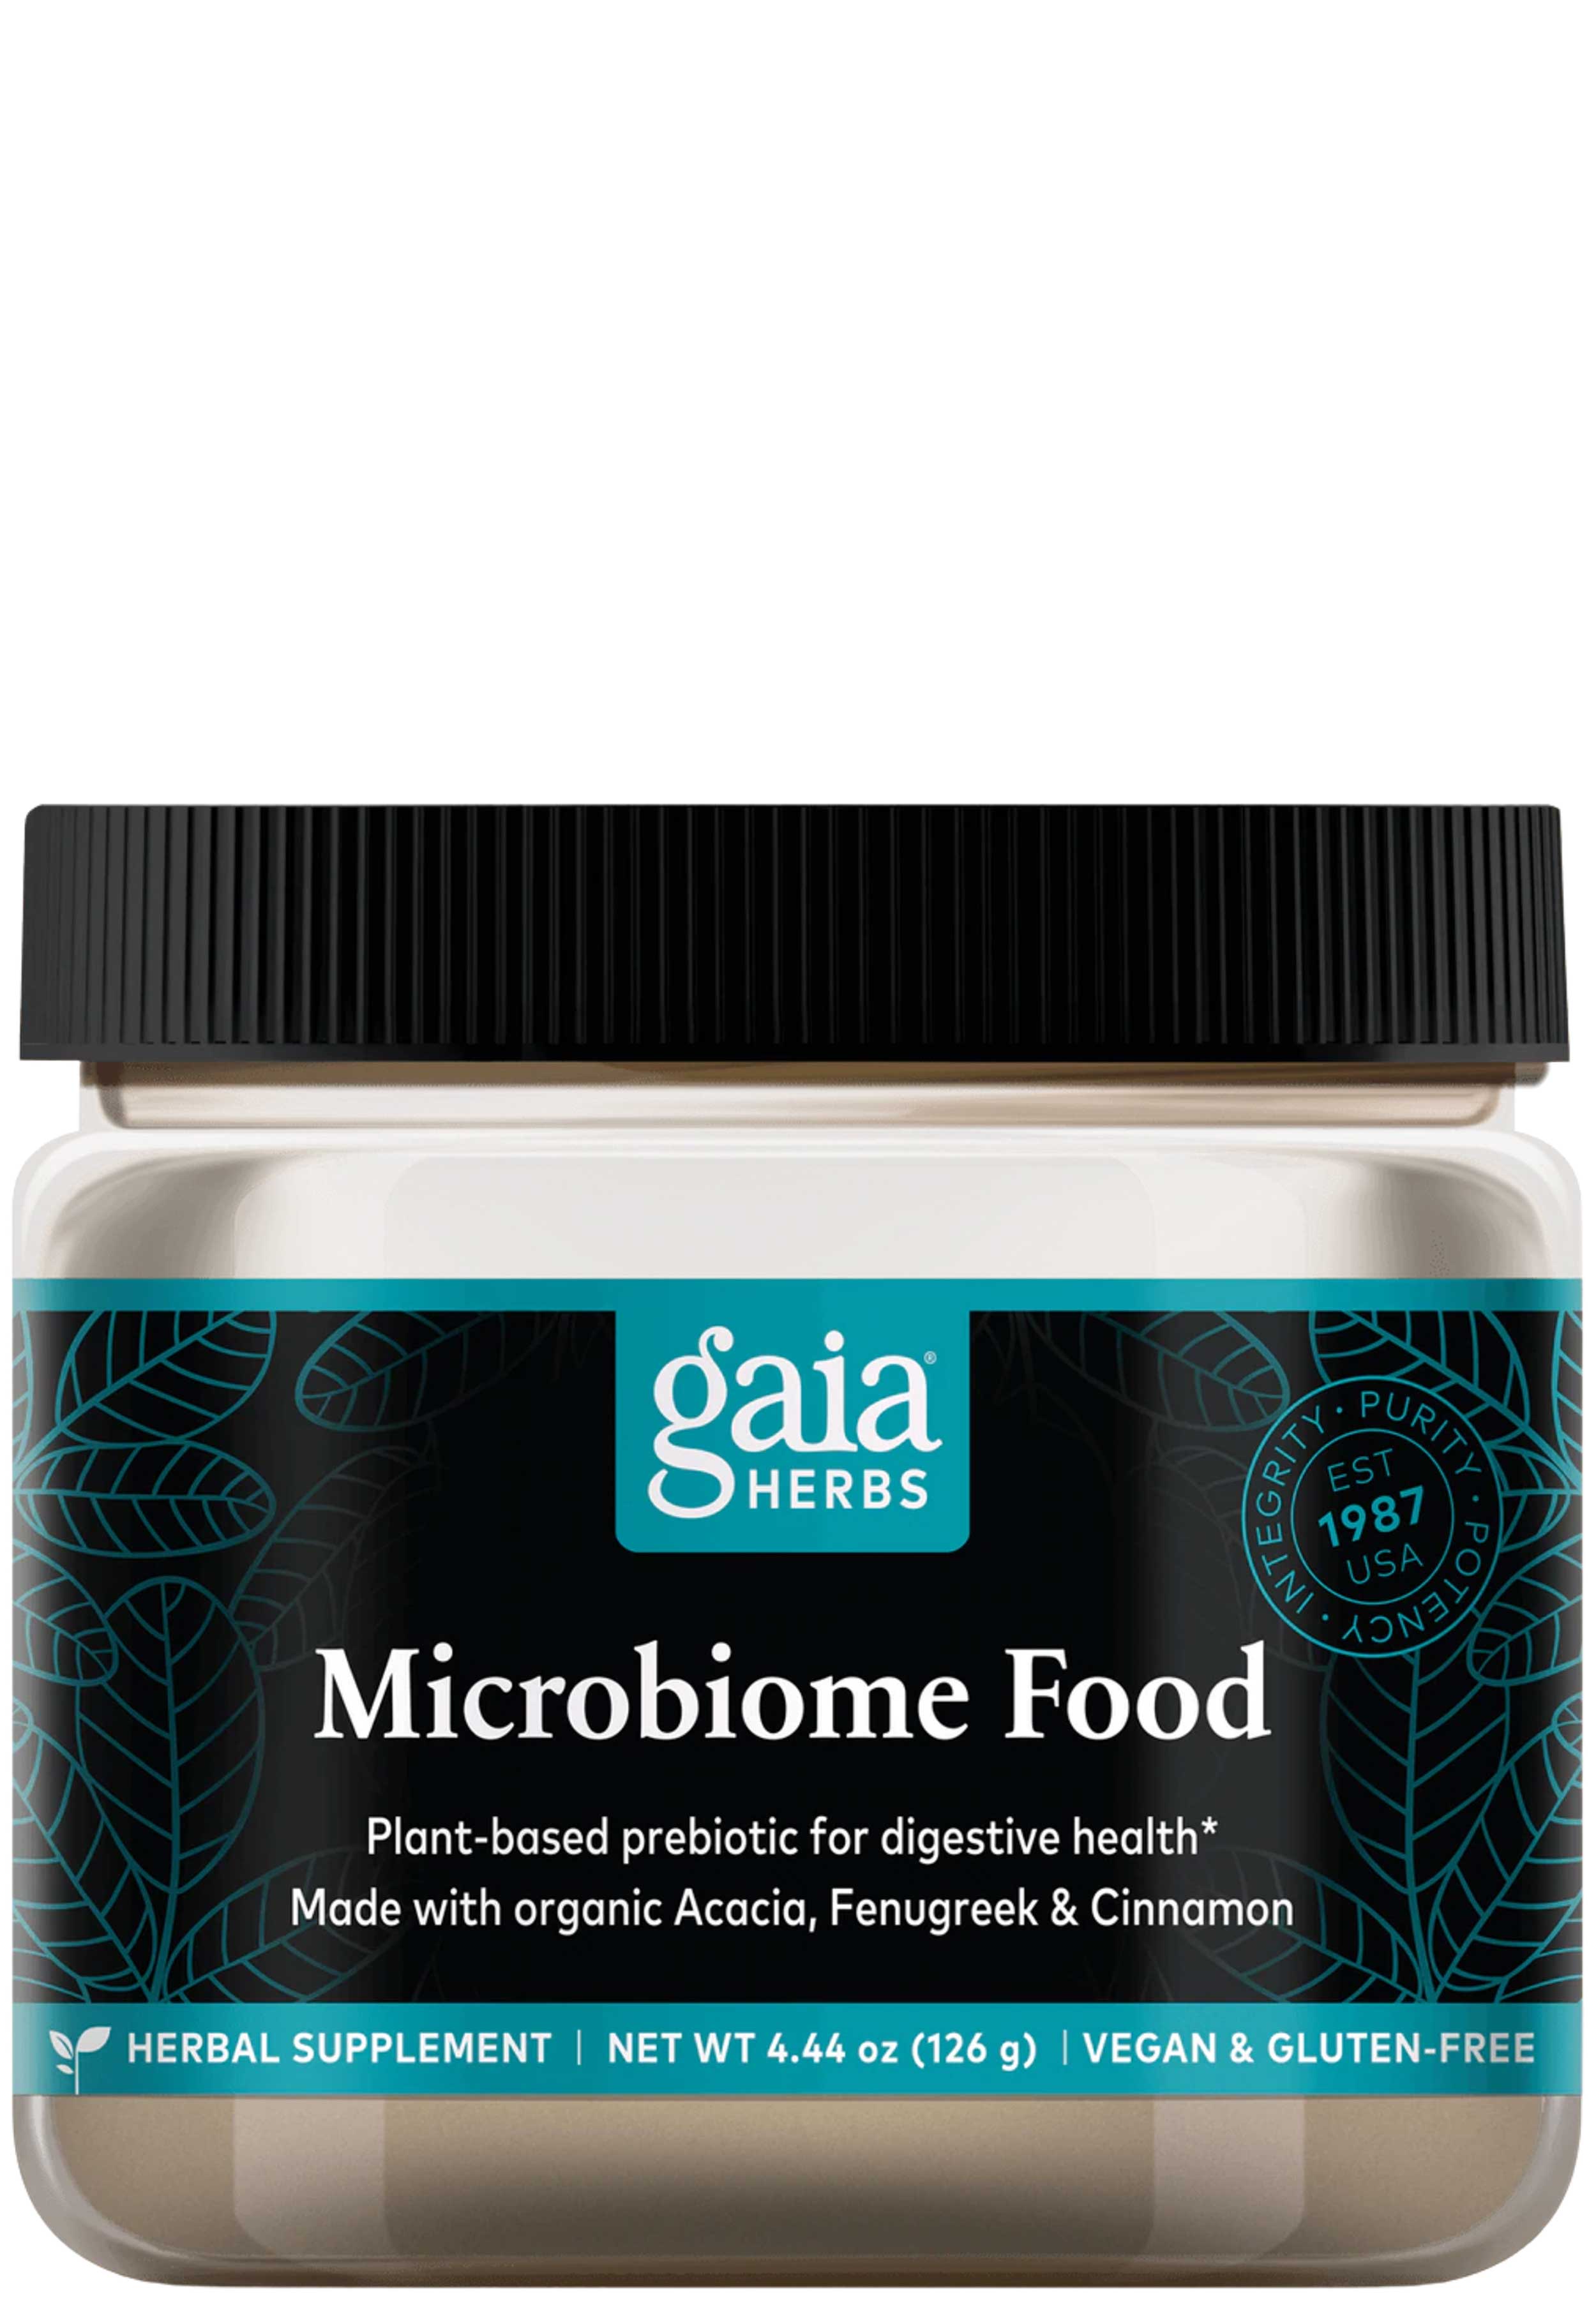 Gaia Herbs Microbiome Food